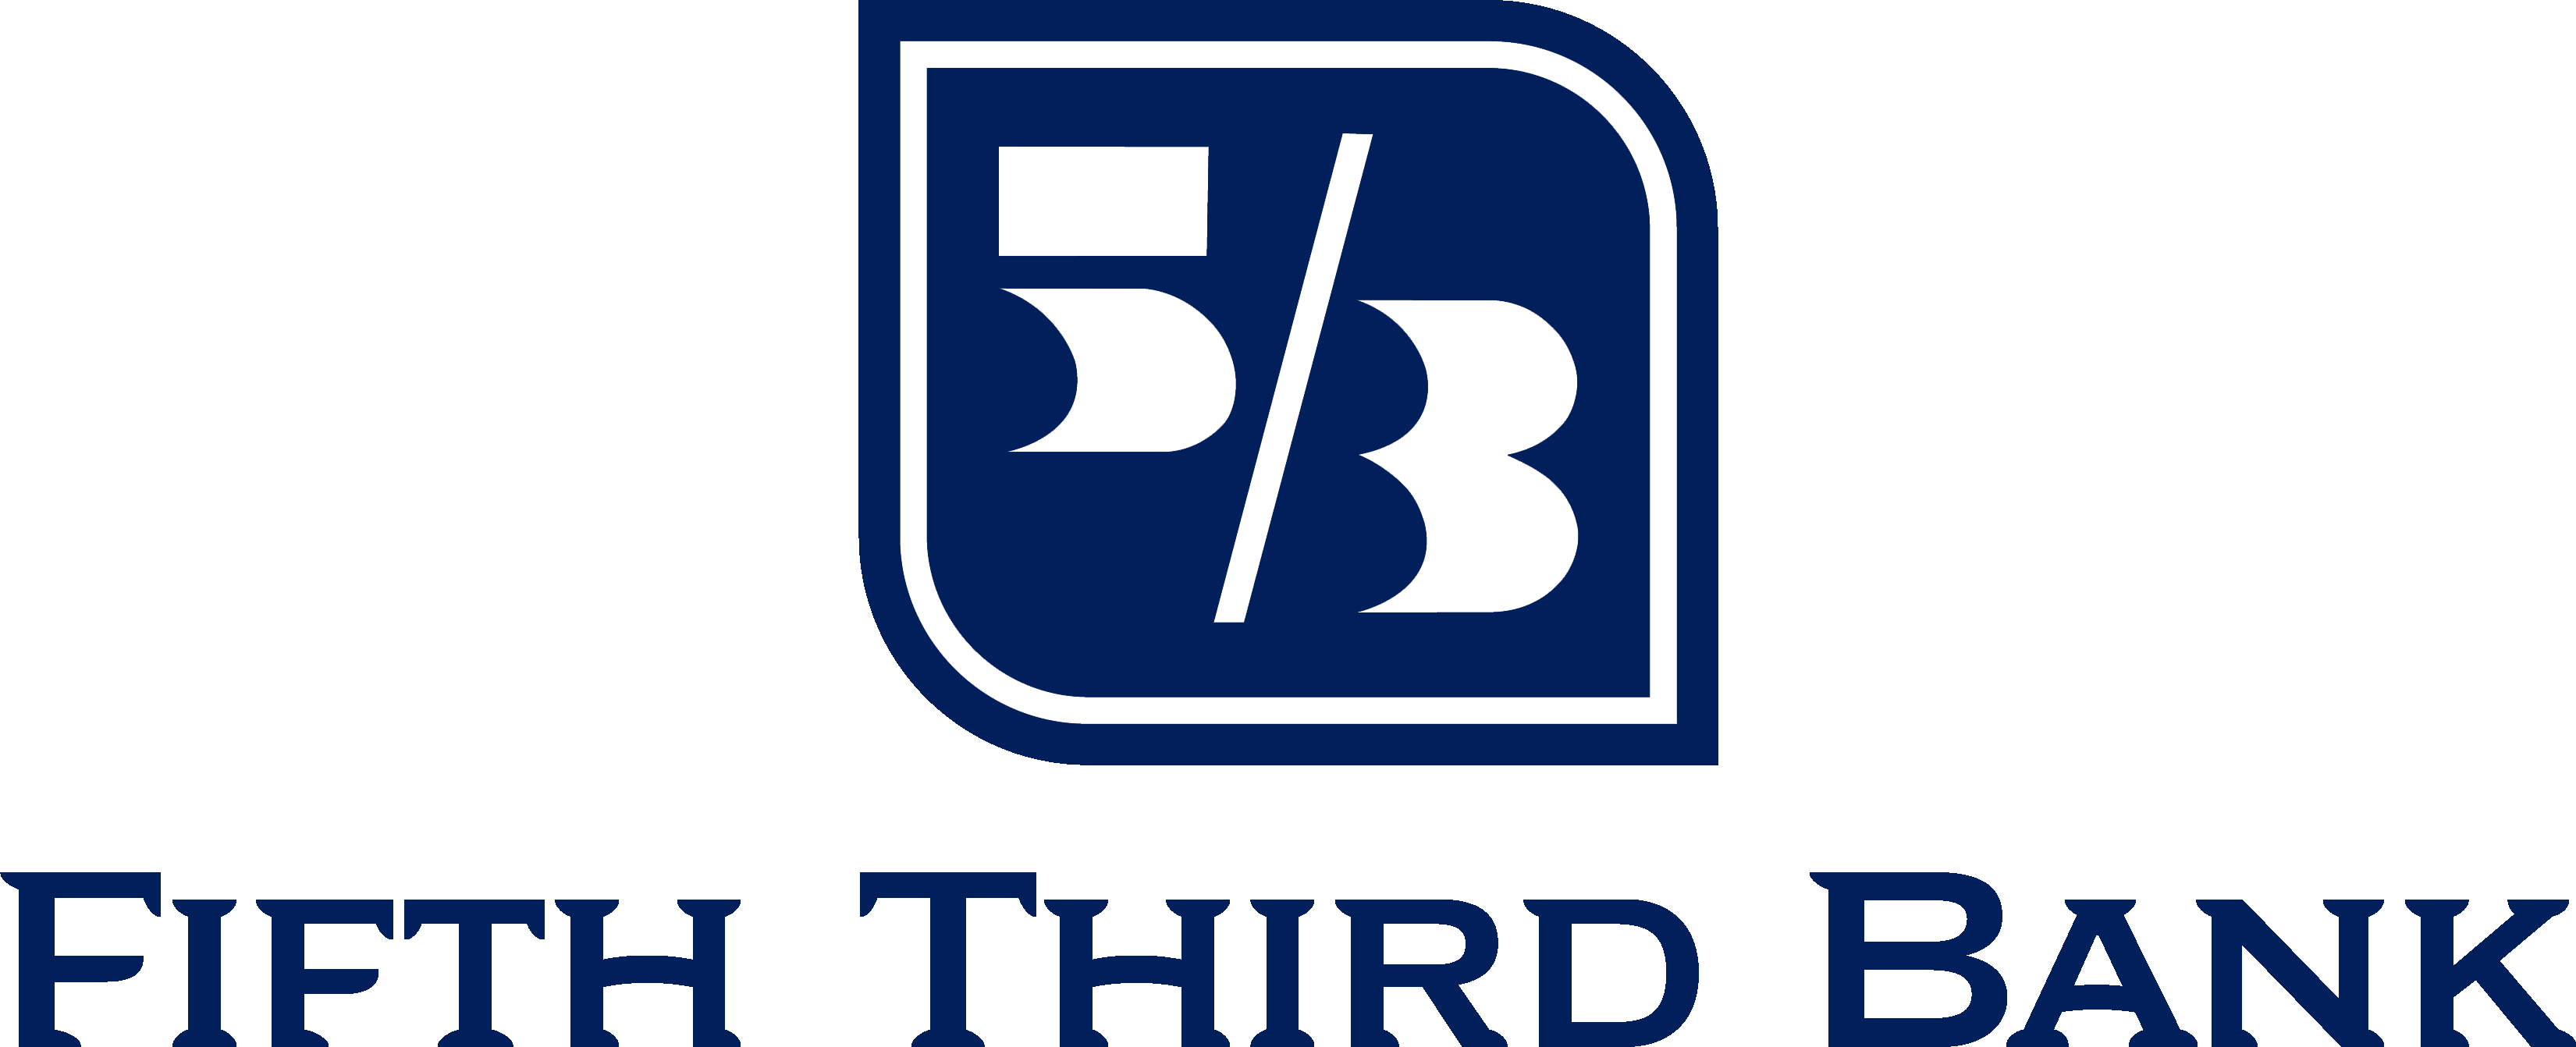 53 Logo